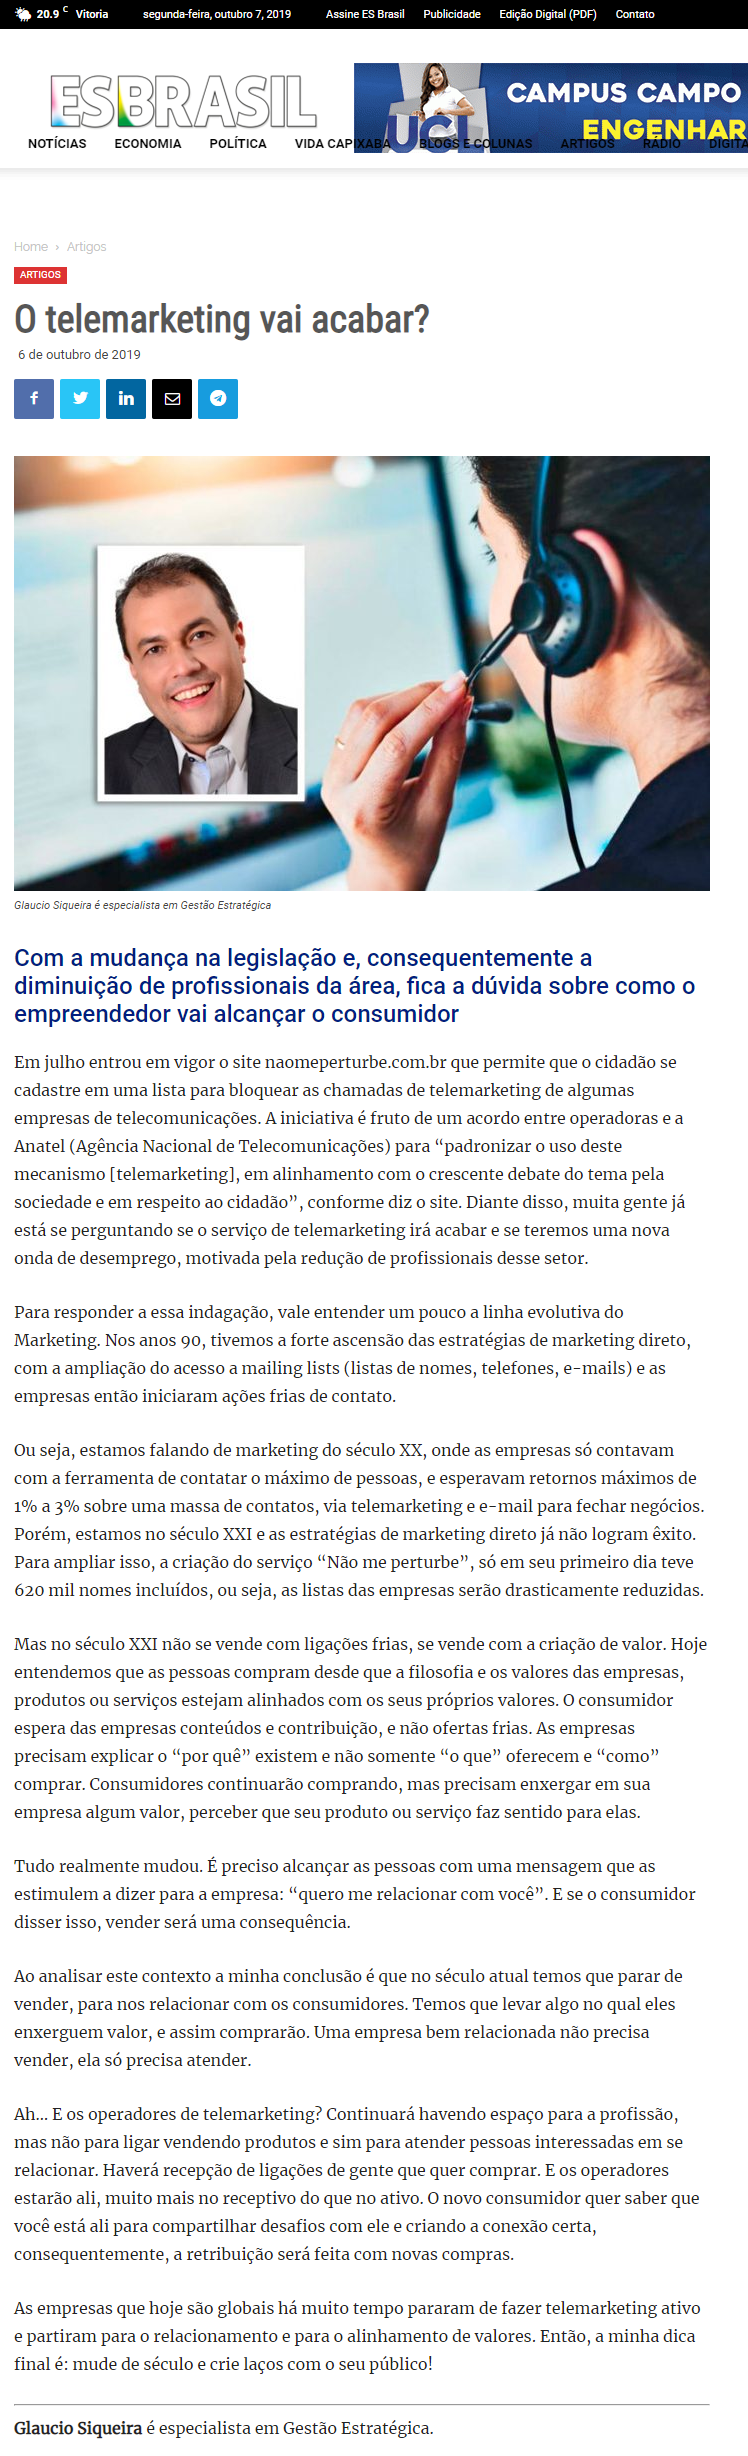 07-10-19 - O telemarketing vai acabr - Revista ES Brasil